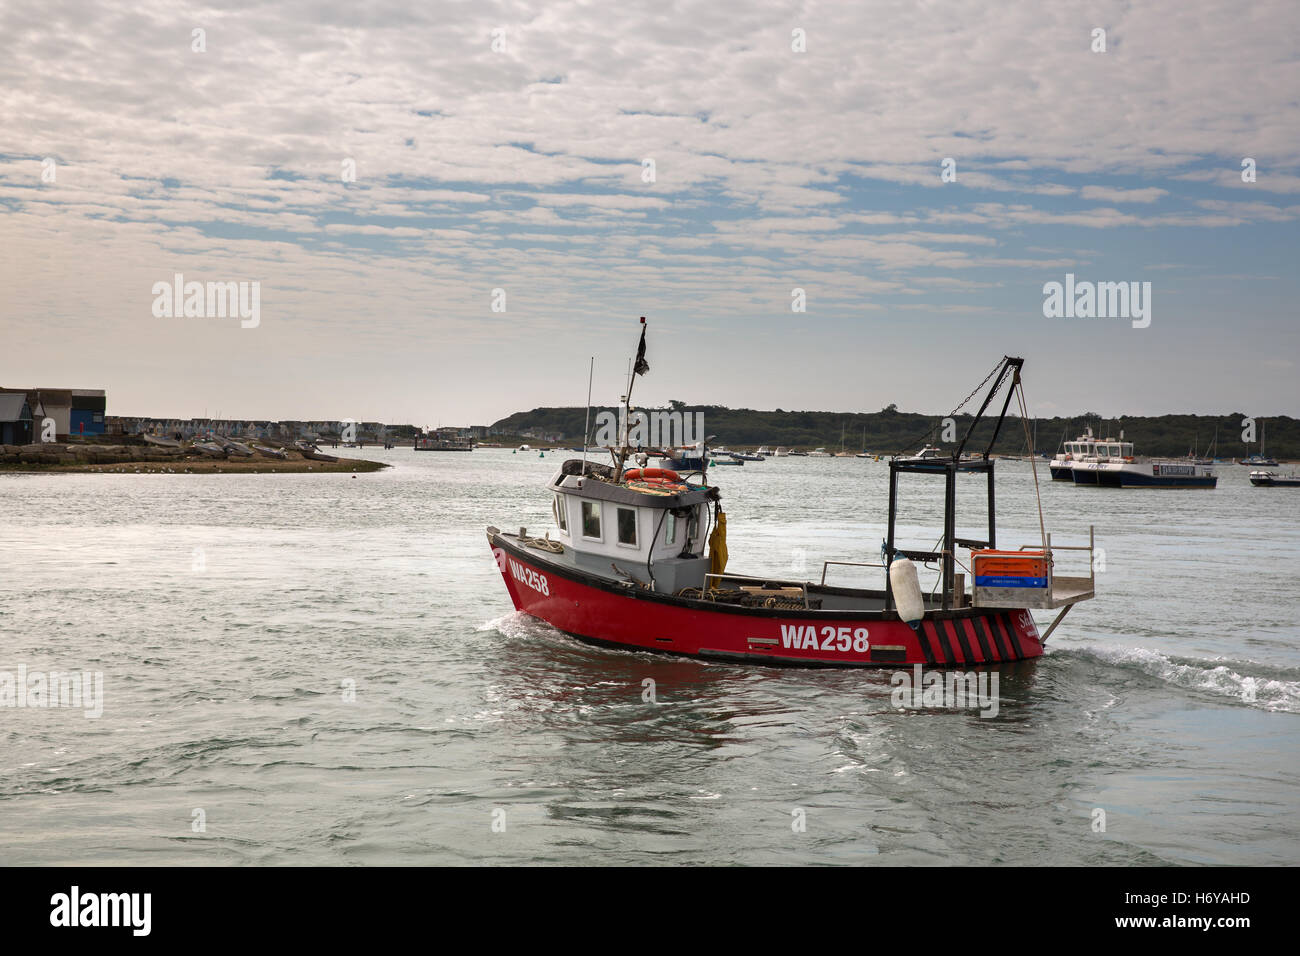 Un bateau de pêche dans la région de Mudeford Quay, Christchurch, Dorset, Angleterre. Banque D'Images